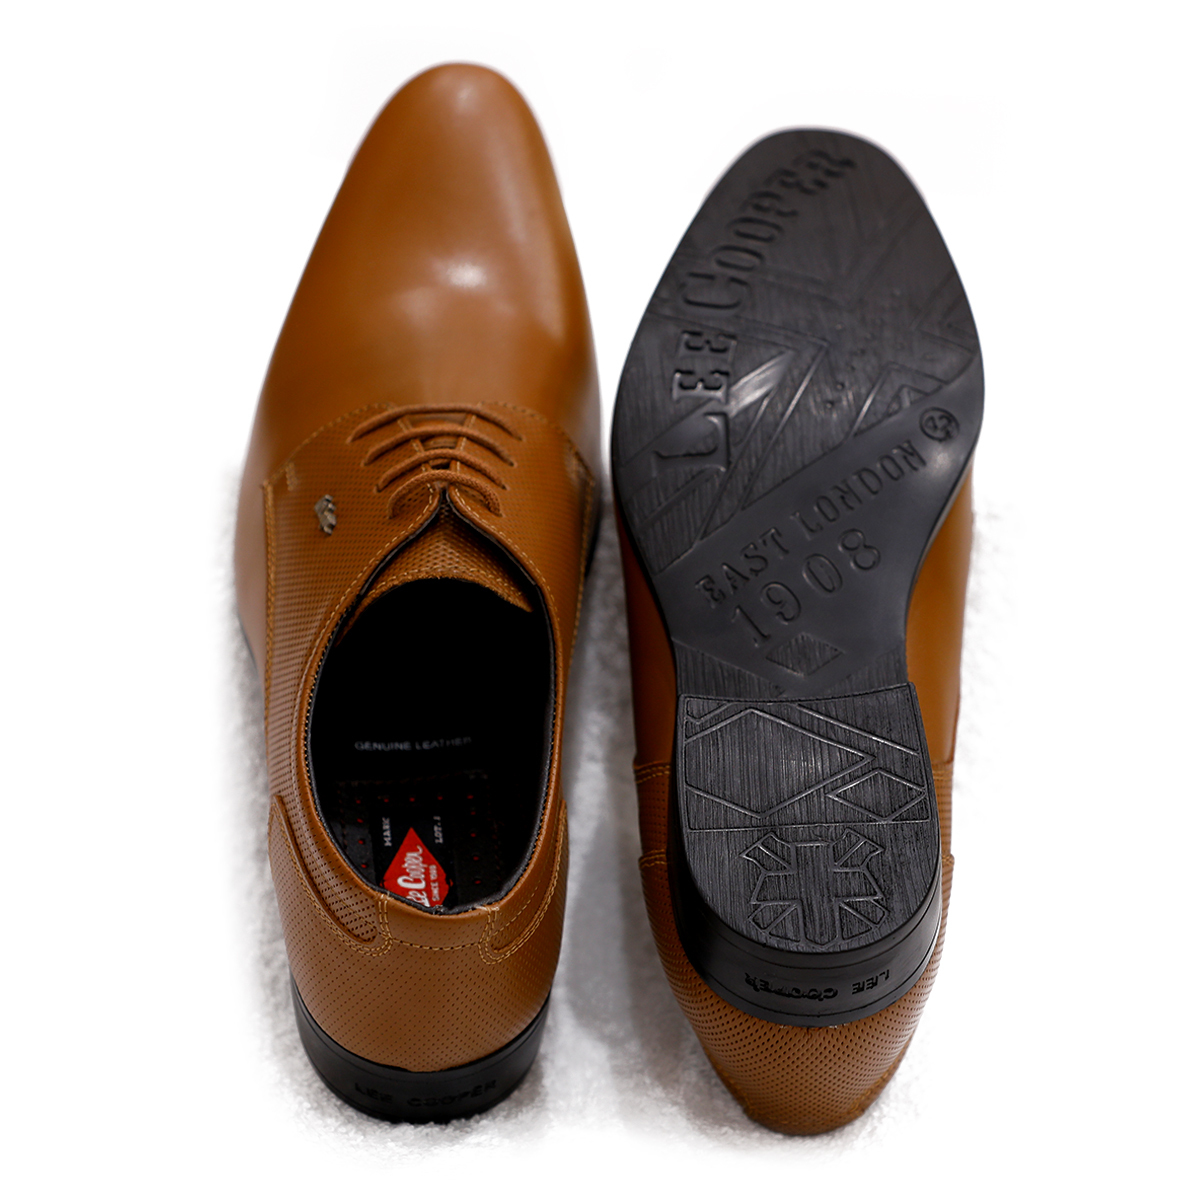 Lee Cooper Mens Formal Shoe LC1679B5